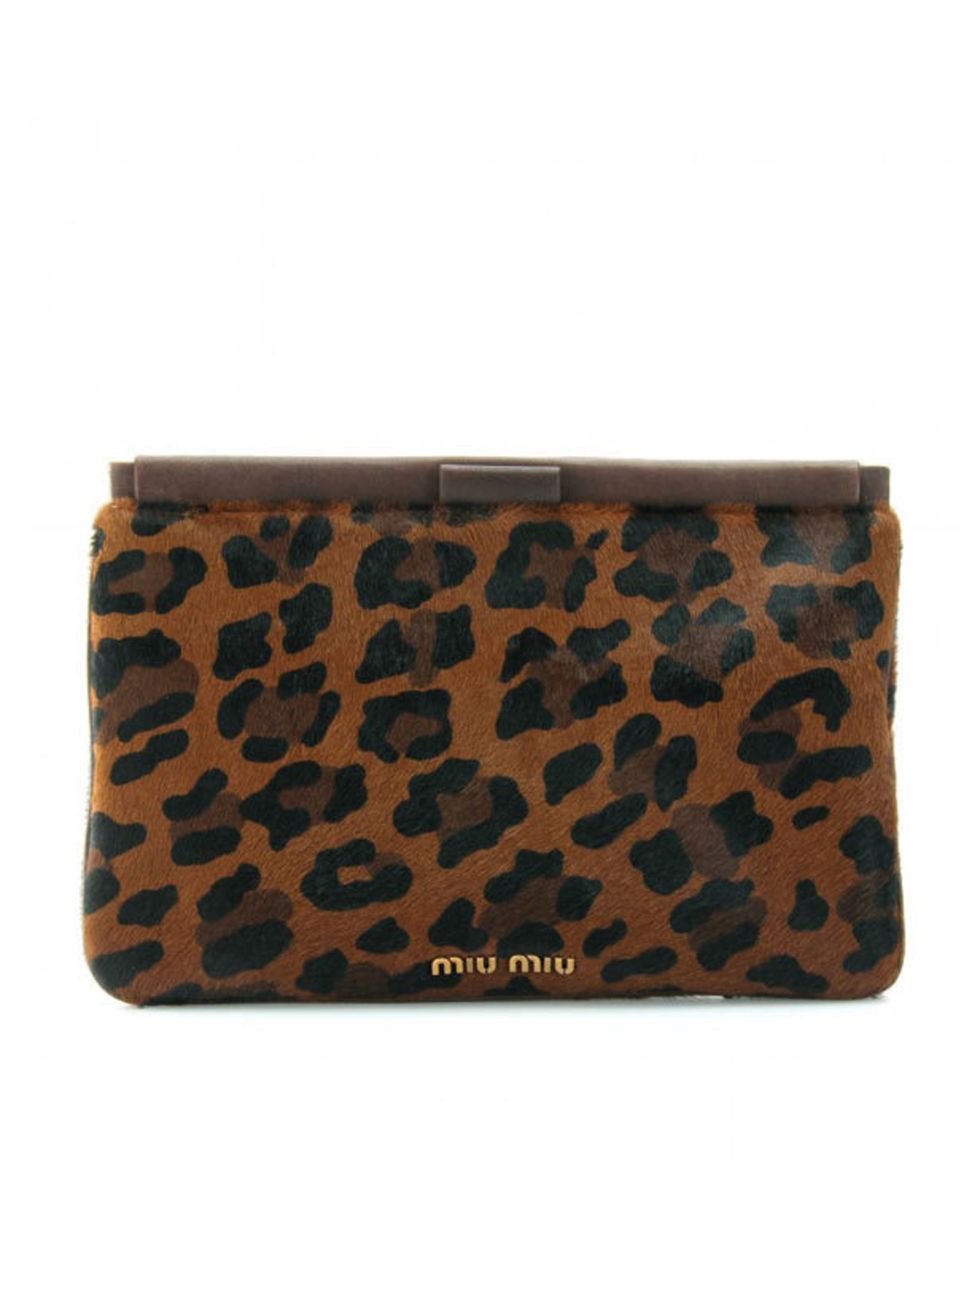 <p>Miu Miu animal print haircalf frame bag clutch, £320, at <a href="http://www.mytheresa.com/uk_en/animal-print-haircalf-frame-clutch.html">mytheresa.com</a></p>